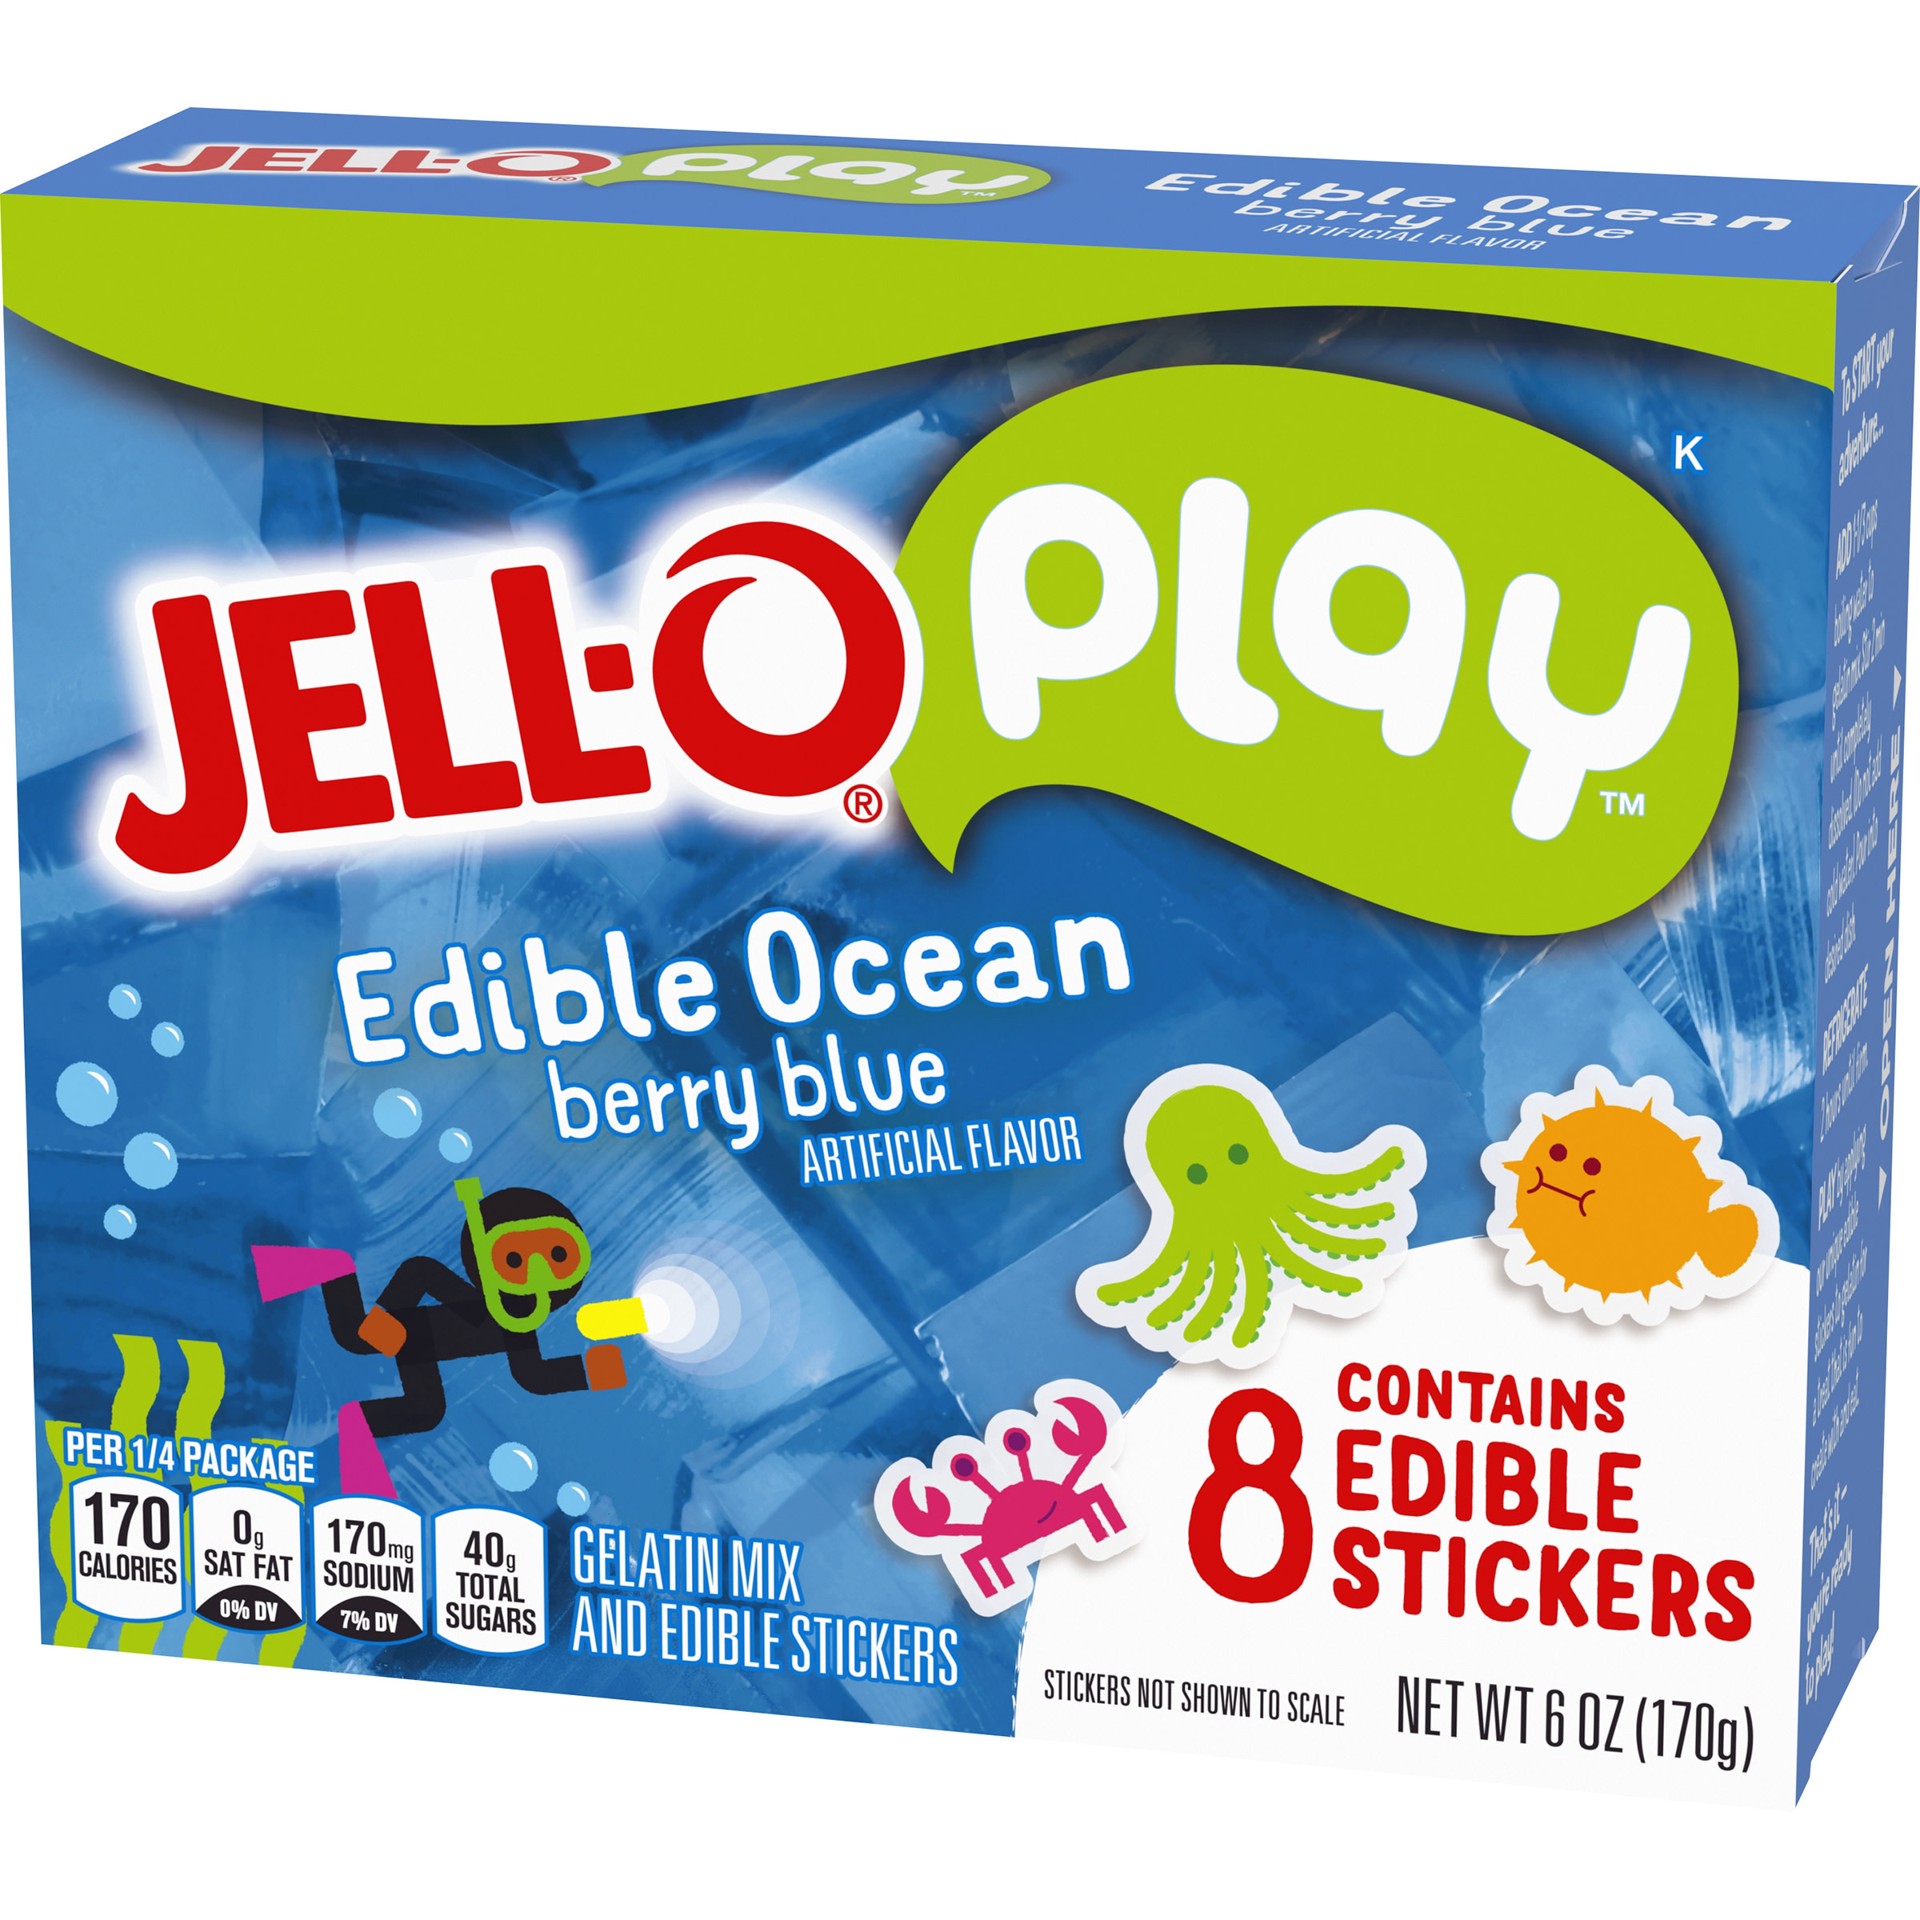 slide 9 of 10, Jell-O Play Edible Ocean Berry Blue Gelatin Mix & Edible Stickers Kit, 6 oz